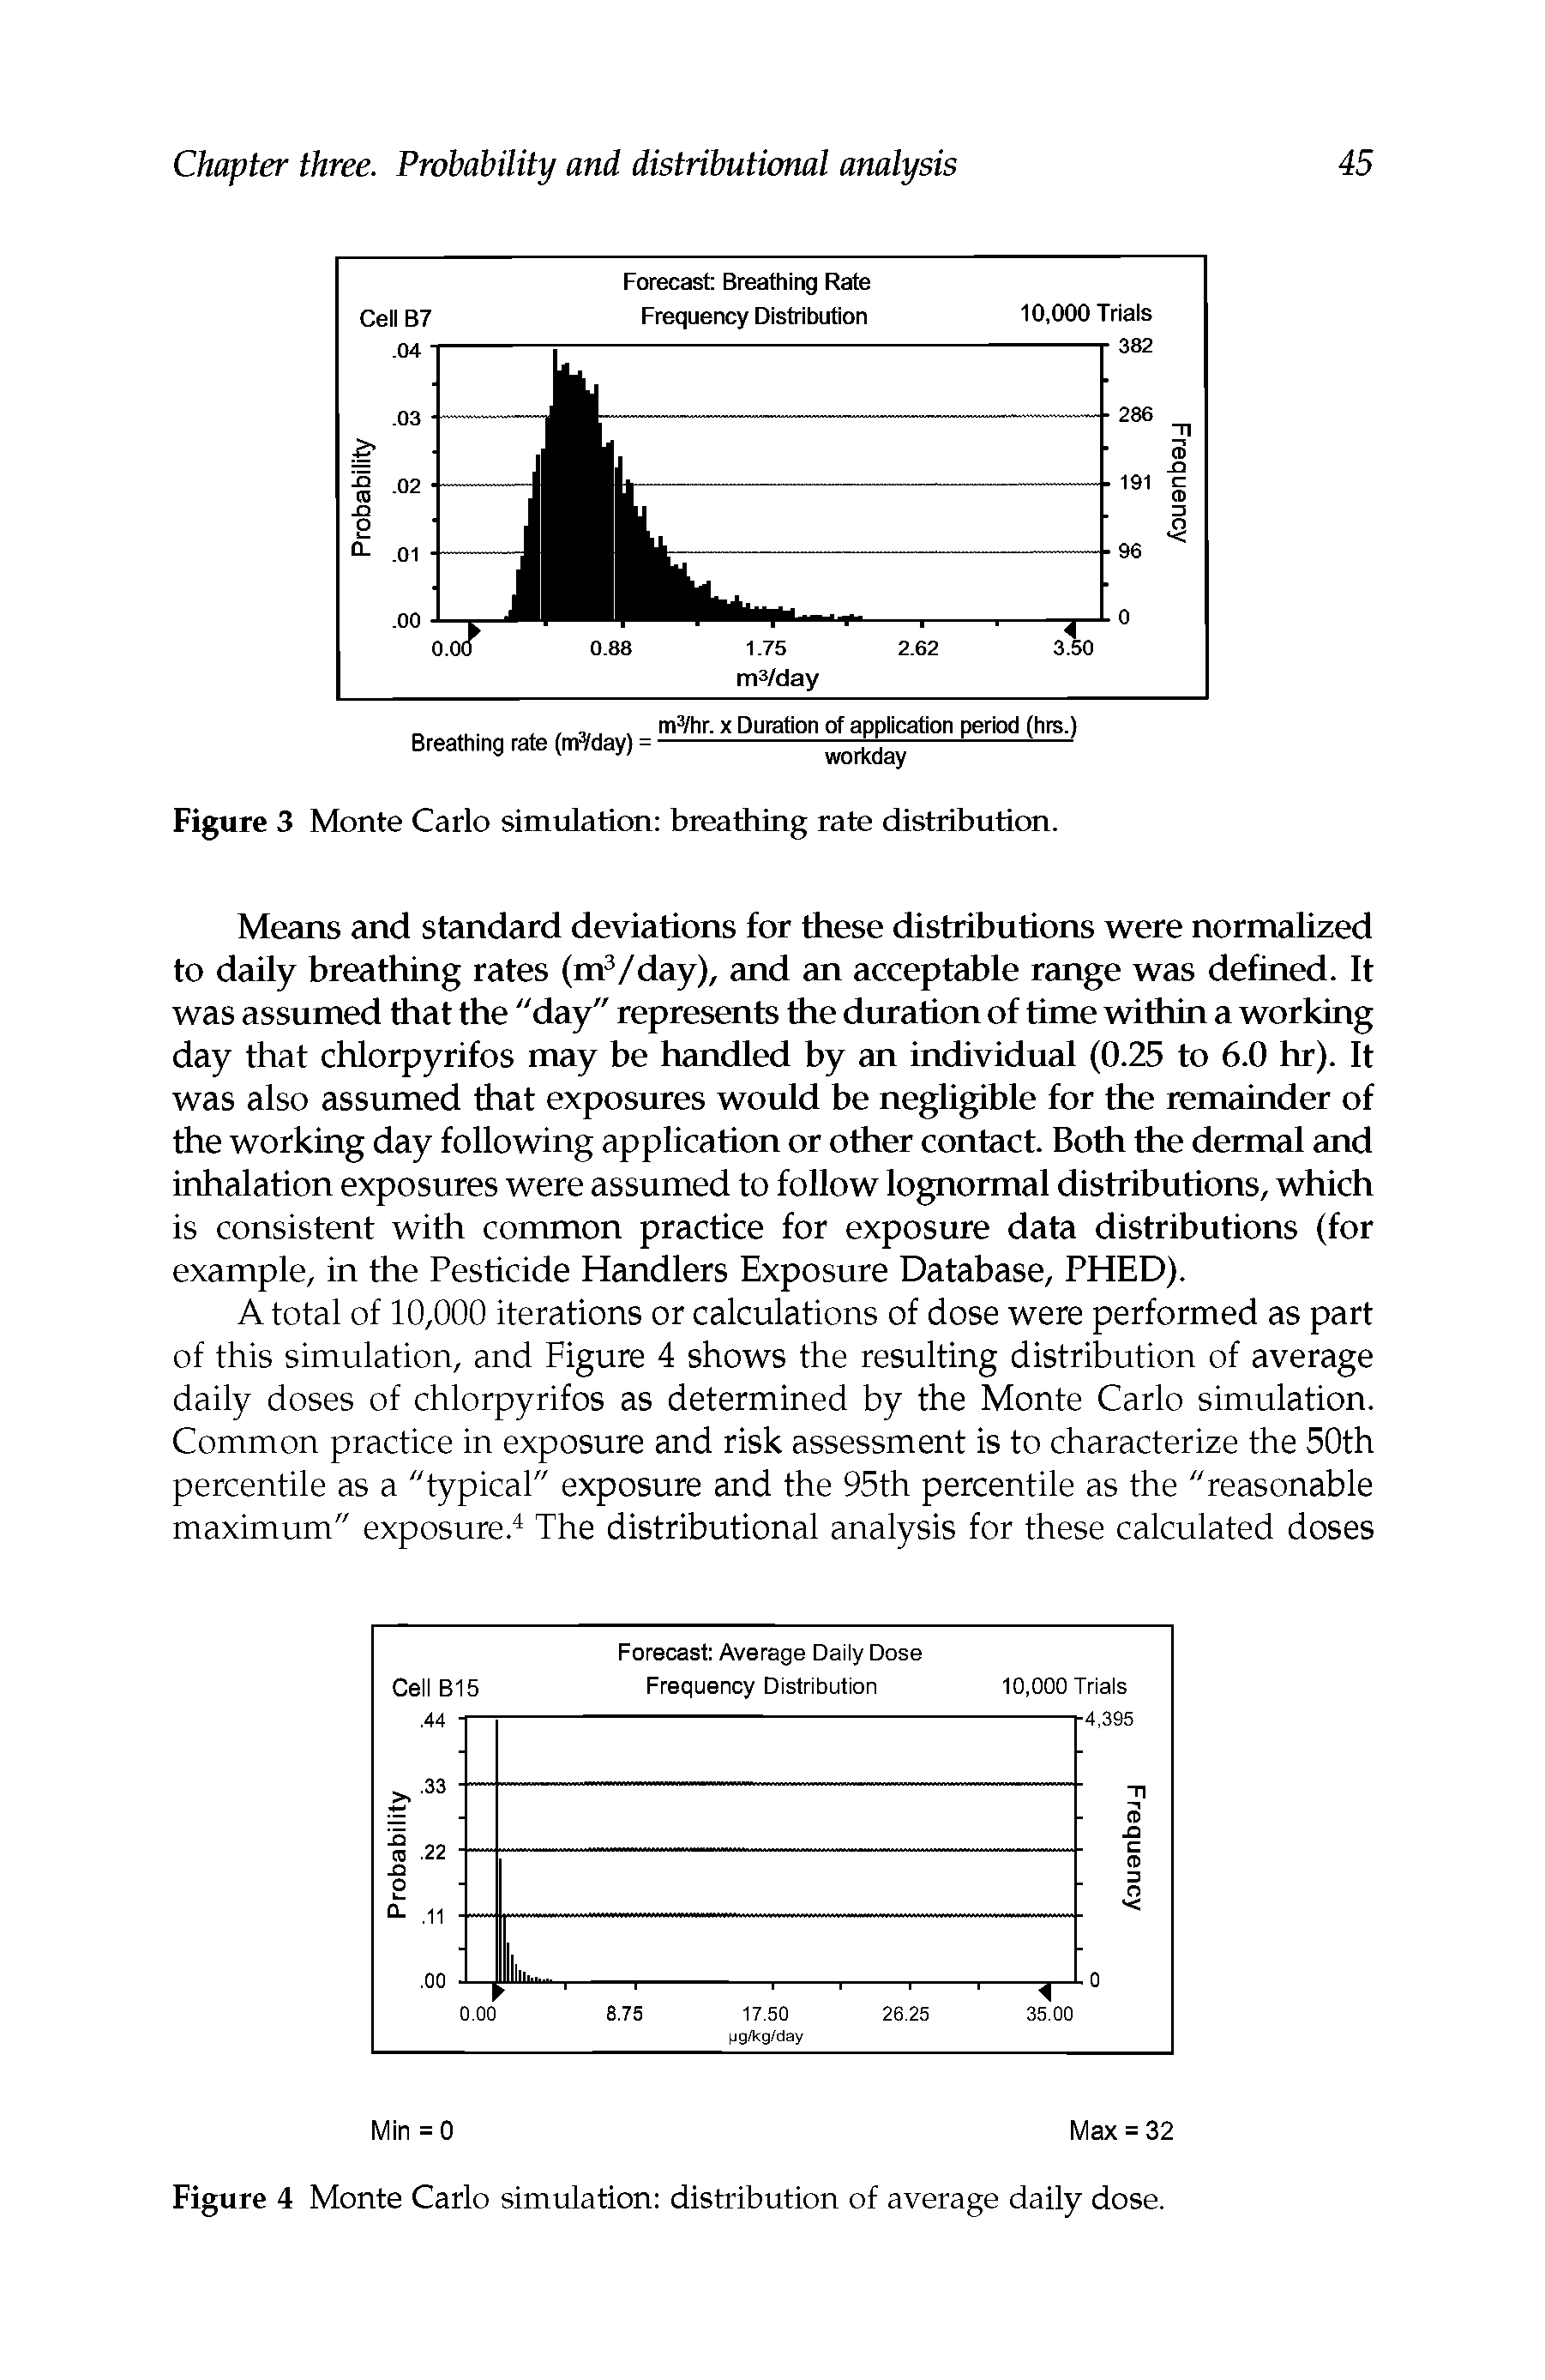 Figure 4 Monte Carlo simulation distribution of average daily dose.